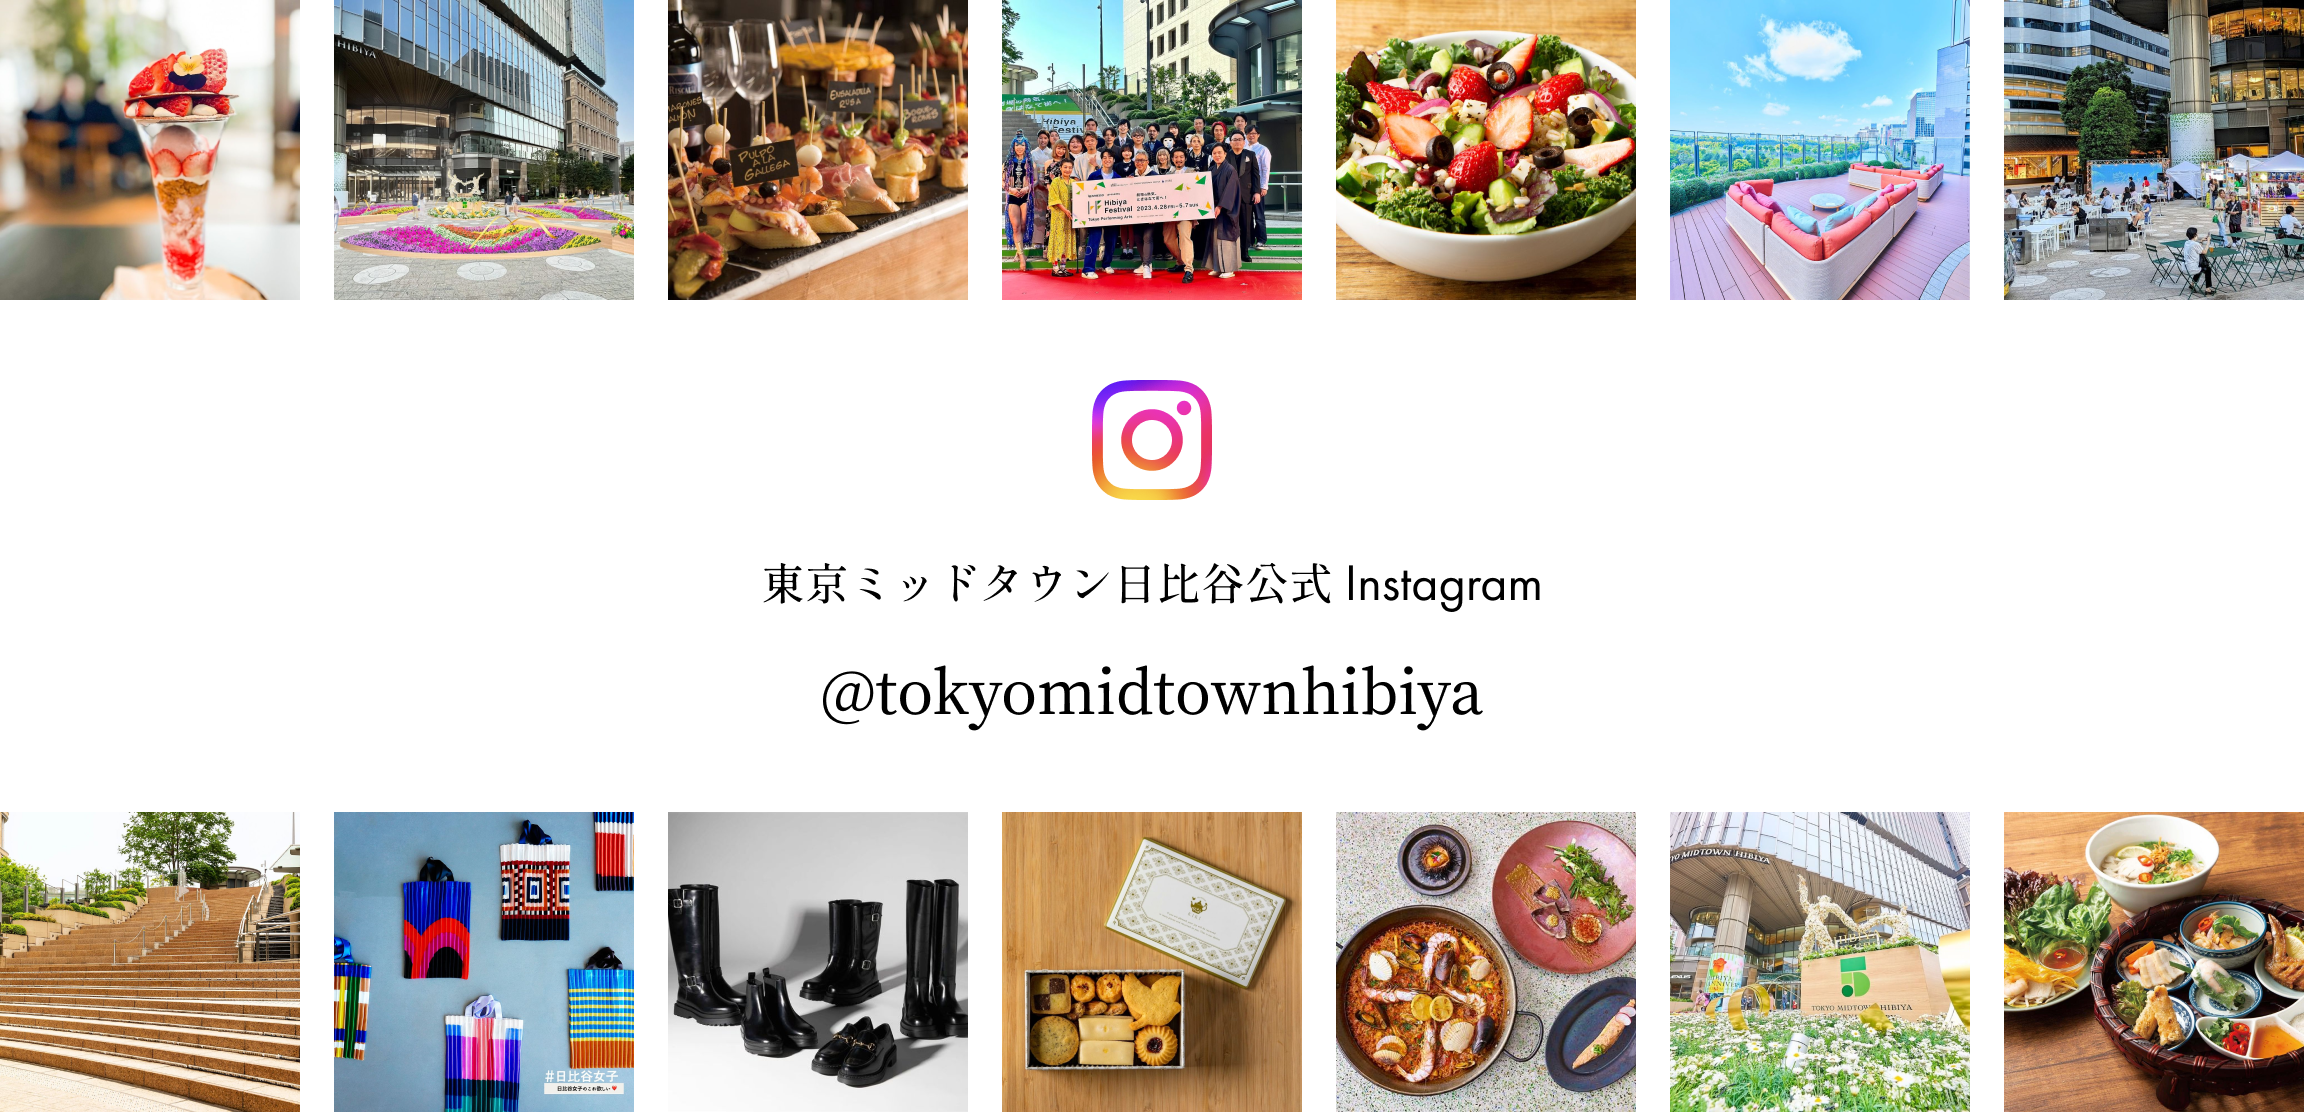 TOKYO MIDTOWN HIBIYA Official Instagram @tokyomidtownhibiya